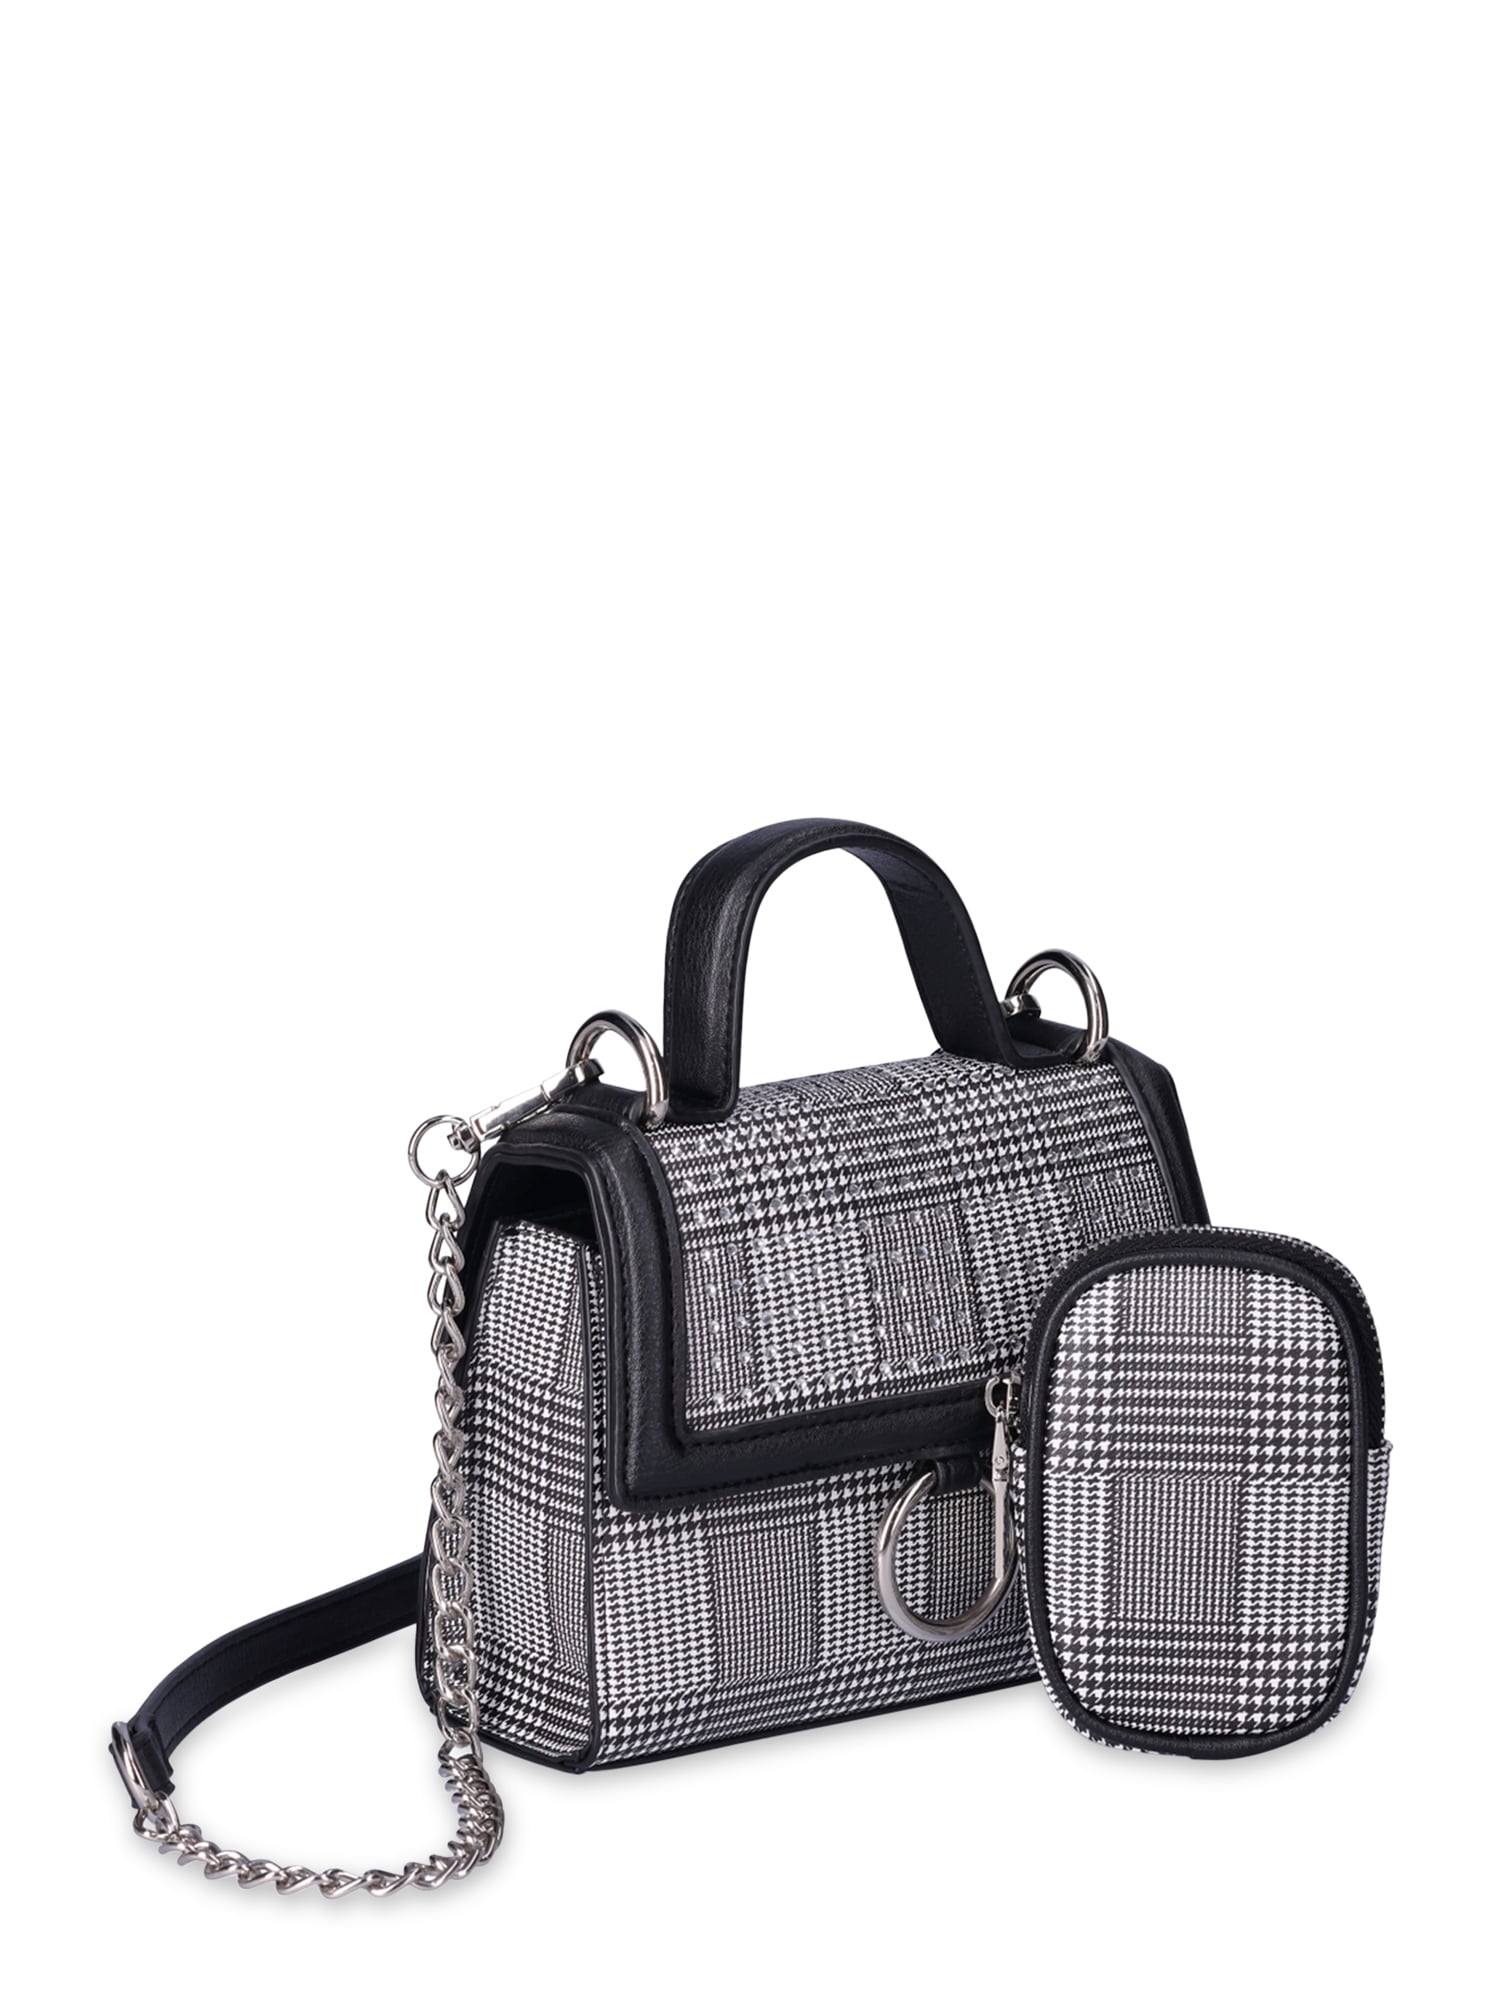 Madden NYC Women's Crystal Mini Top Handle Handbag, Houndstooth, Size: Small, Black